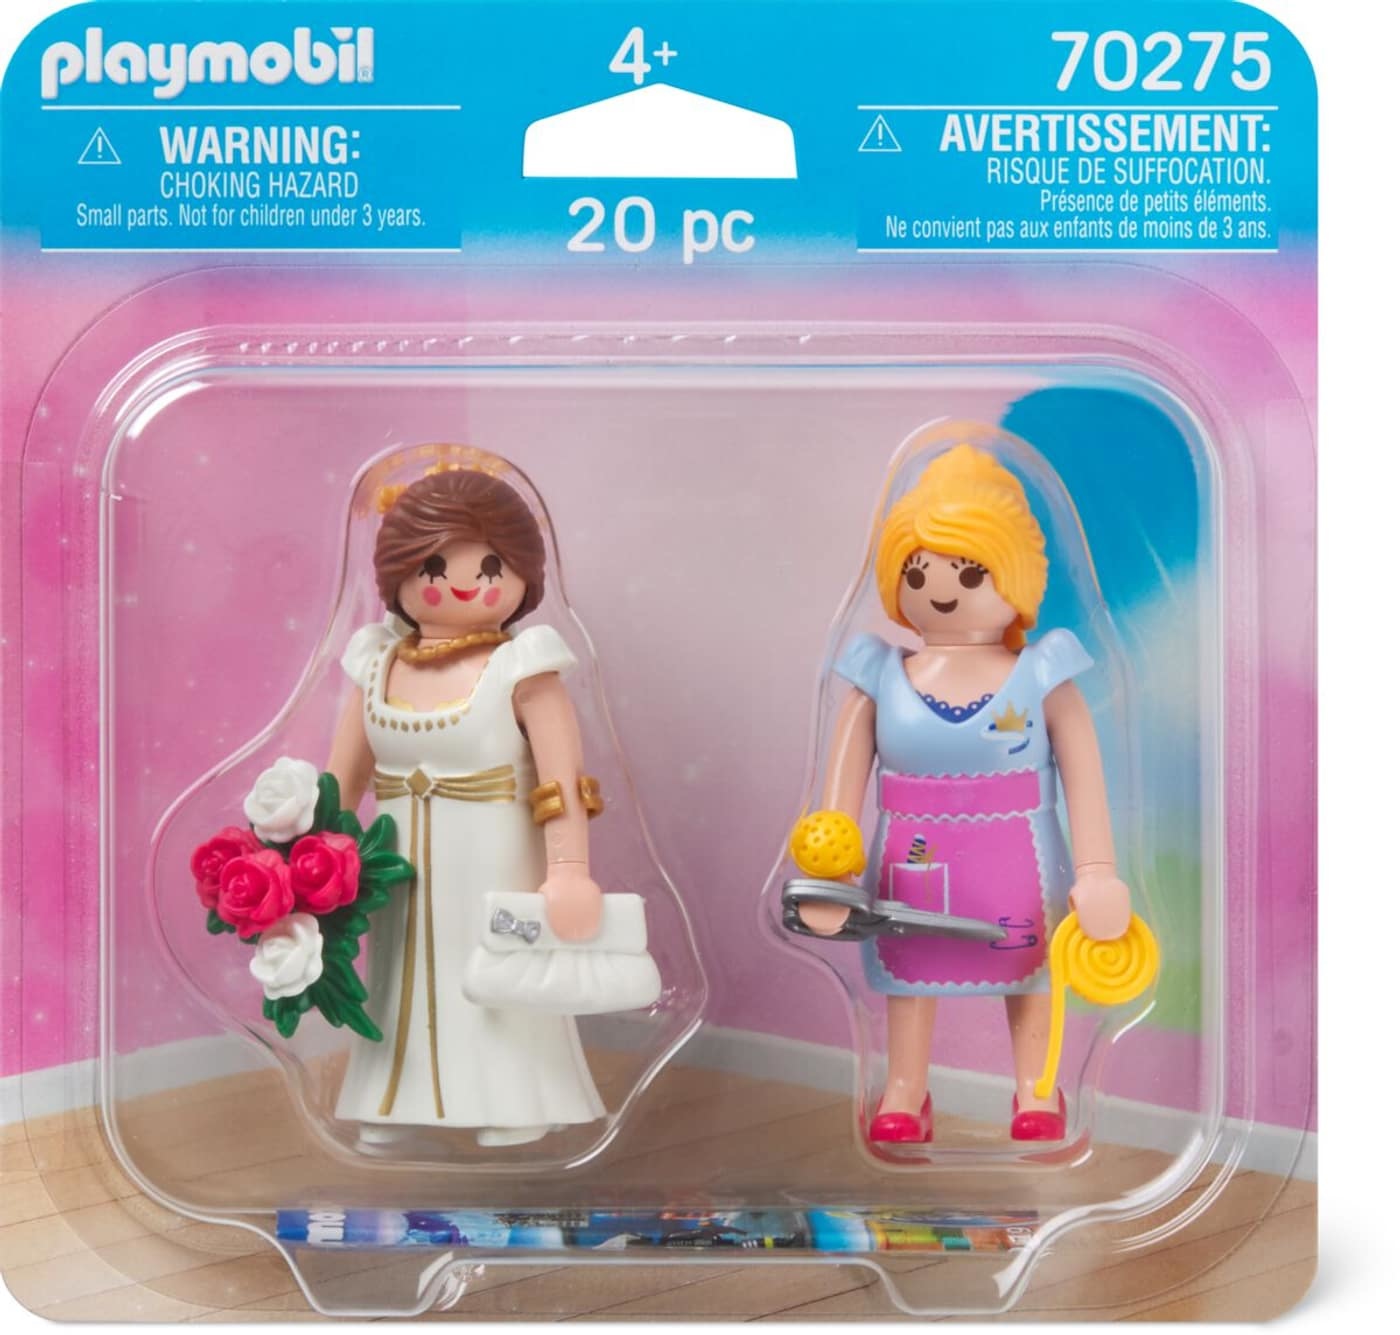 Playmobil Princess and Tailor product no.: 70275